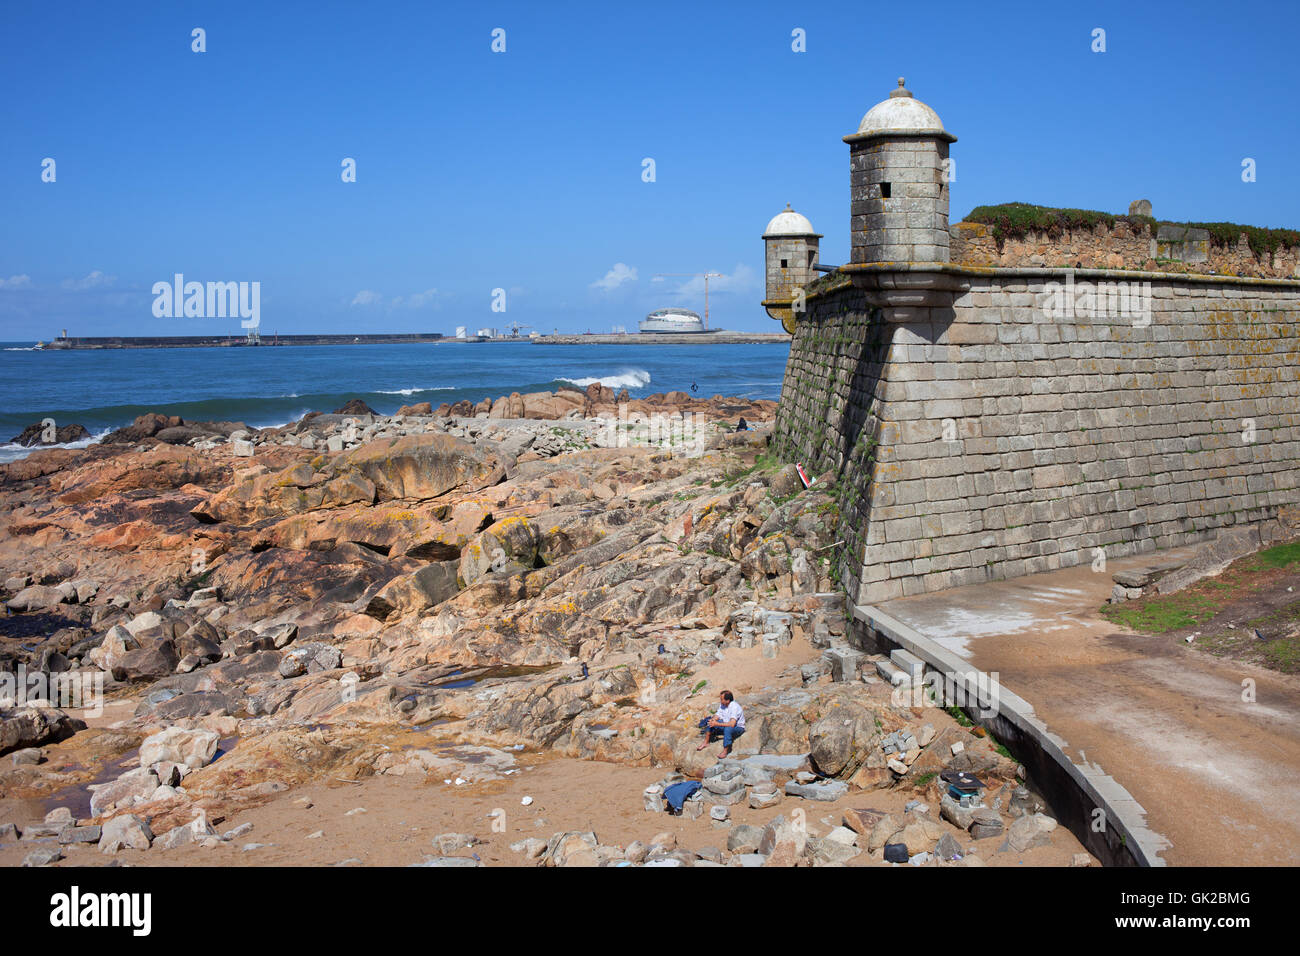 Queijo Castle (Forte de Sao Francisco Xavier) by the Atlantic Ocean in Porto municipality, Portugal Stock Photo